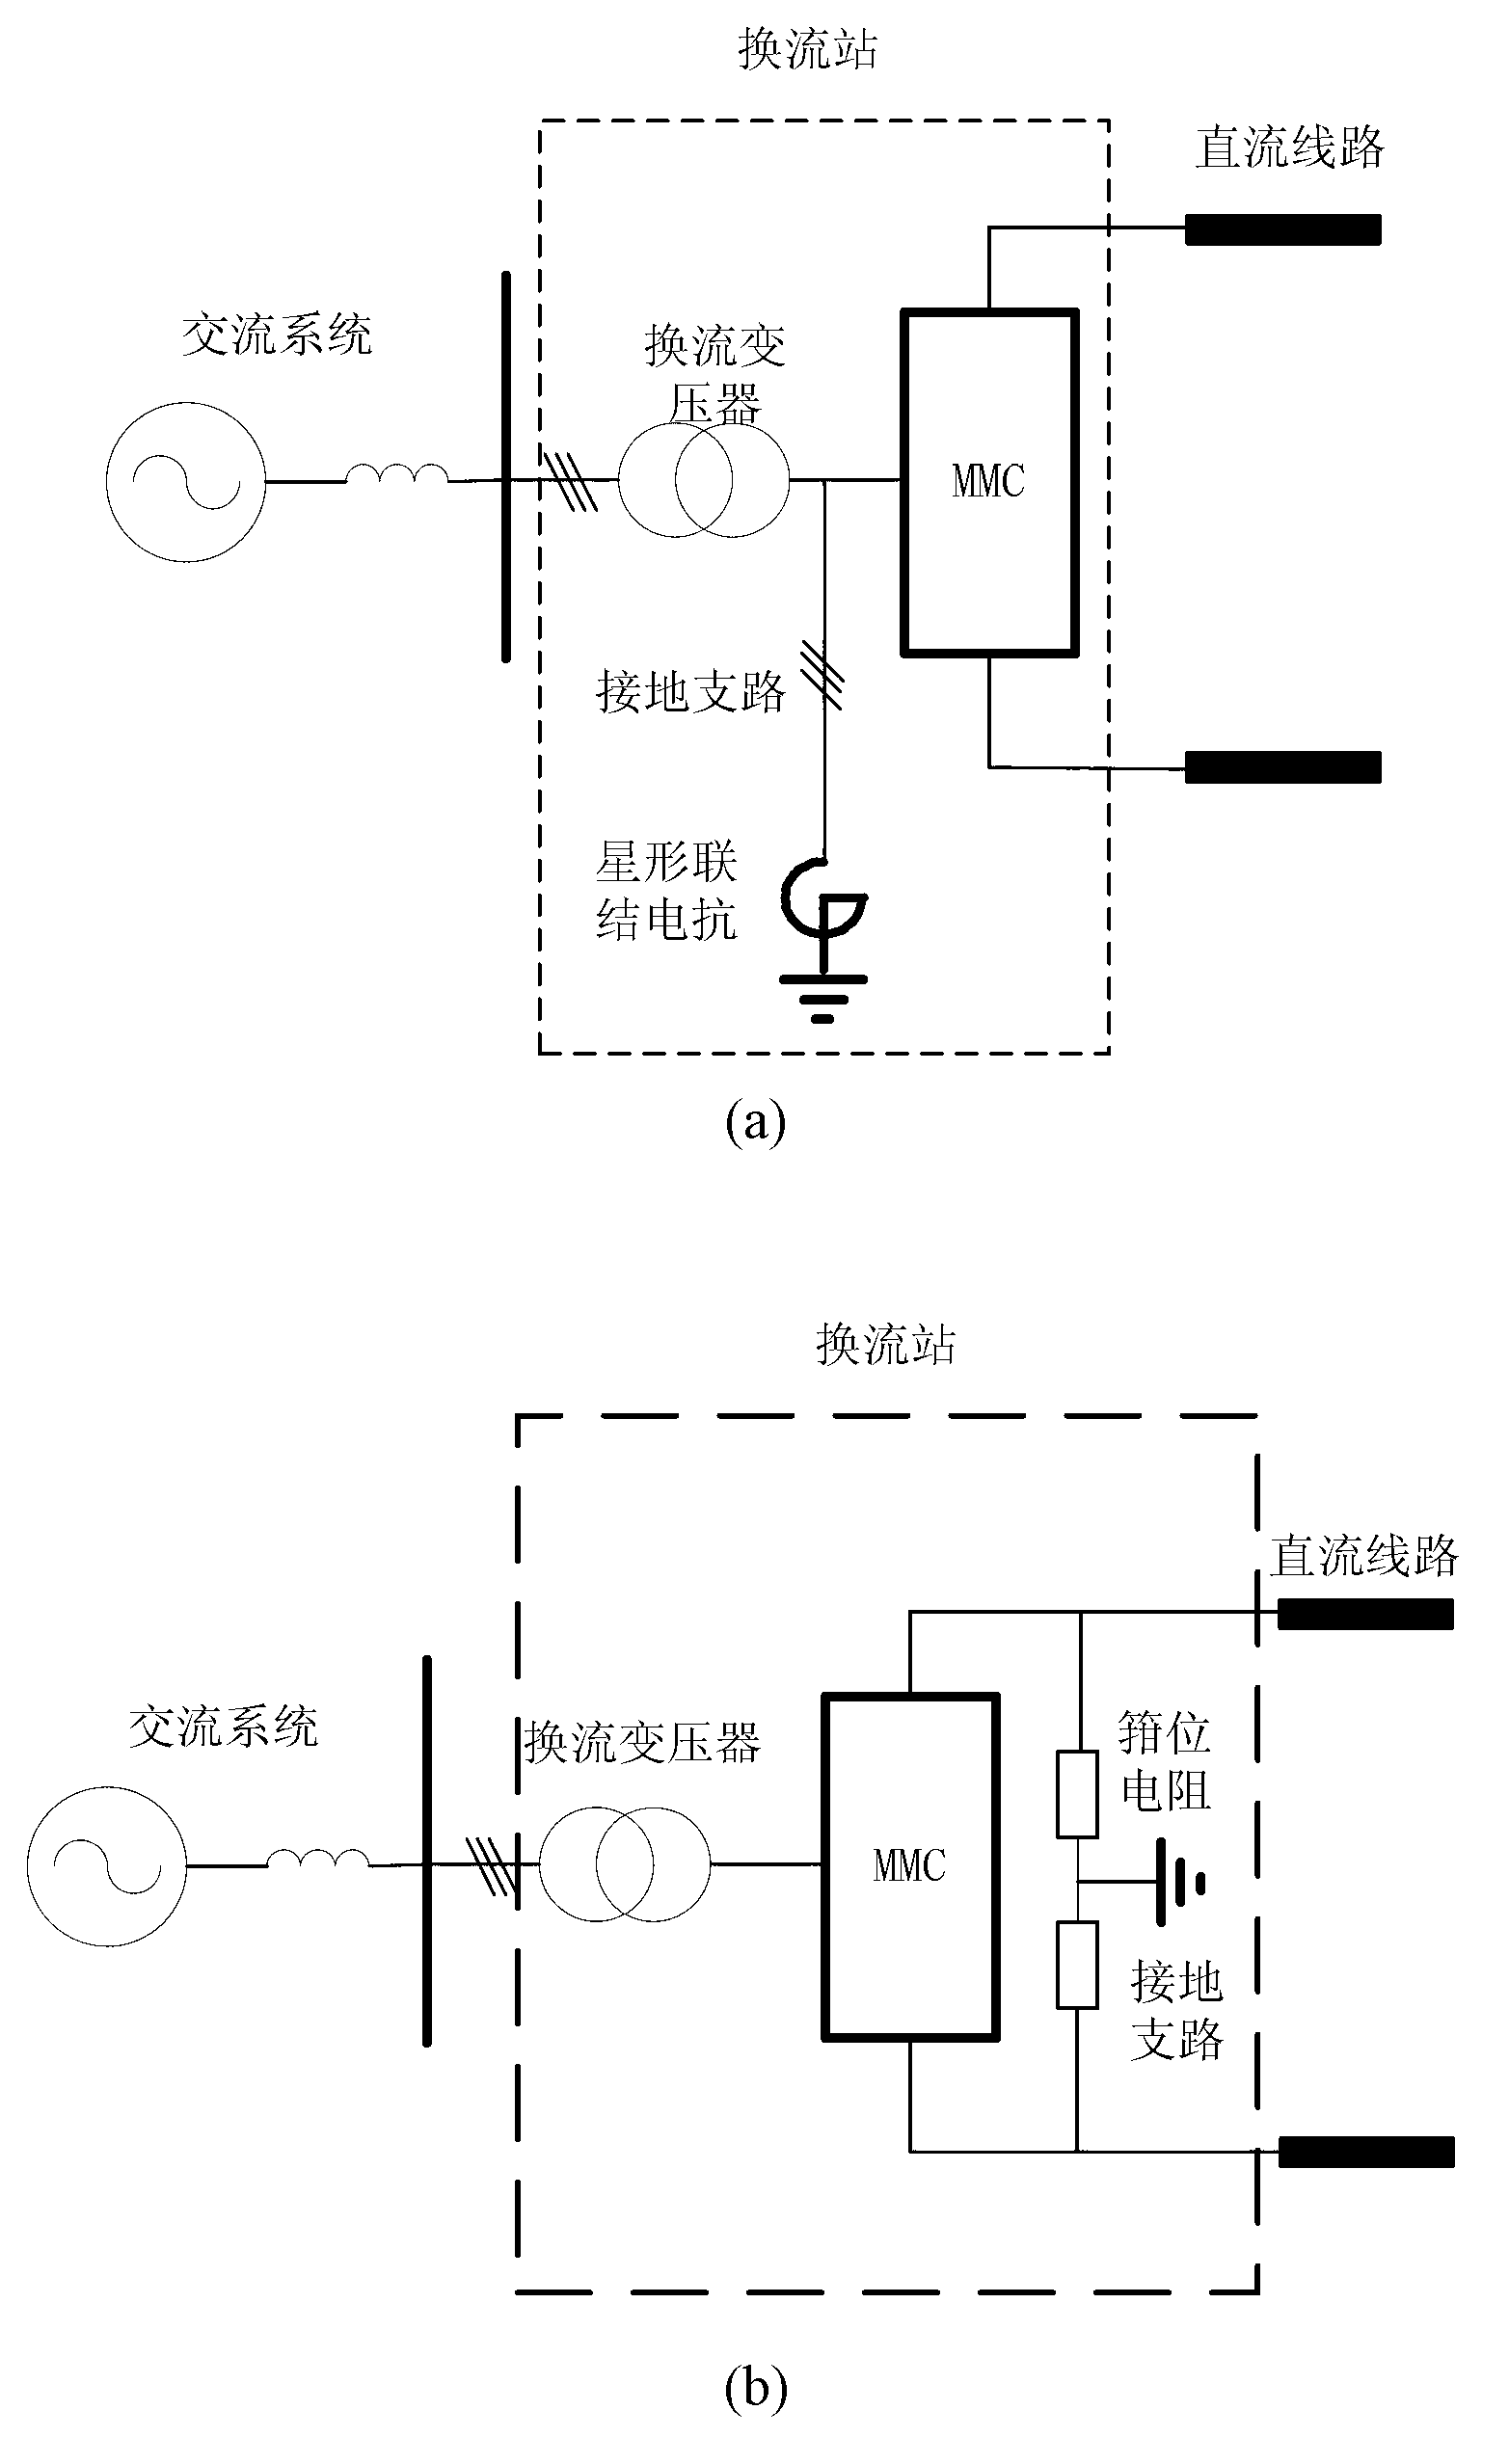 Direct-current converter station based on bipolar structure